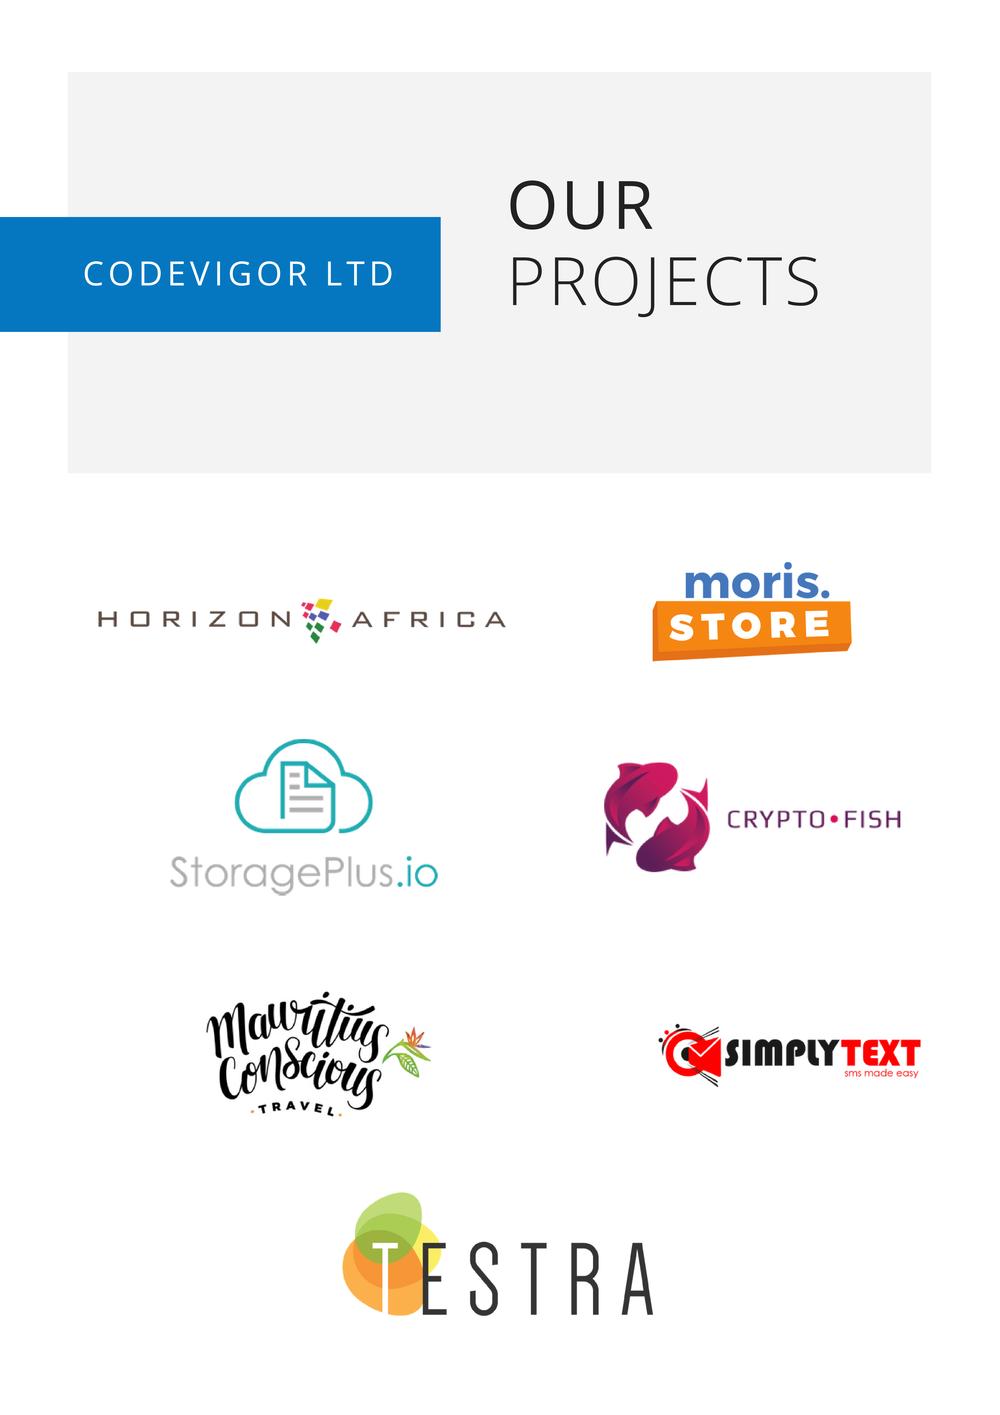 Codevigor Company Profile